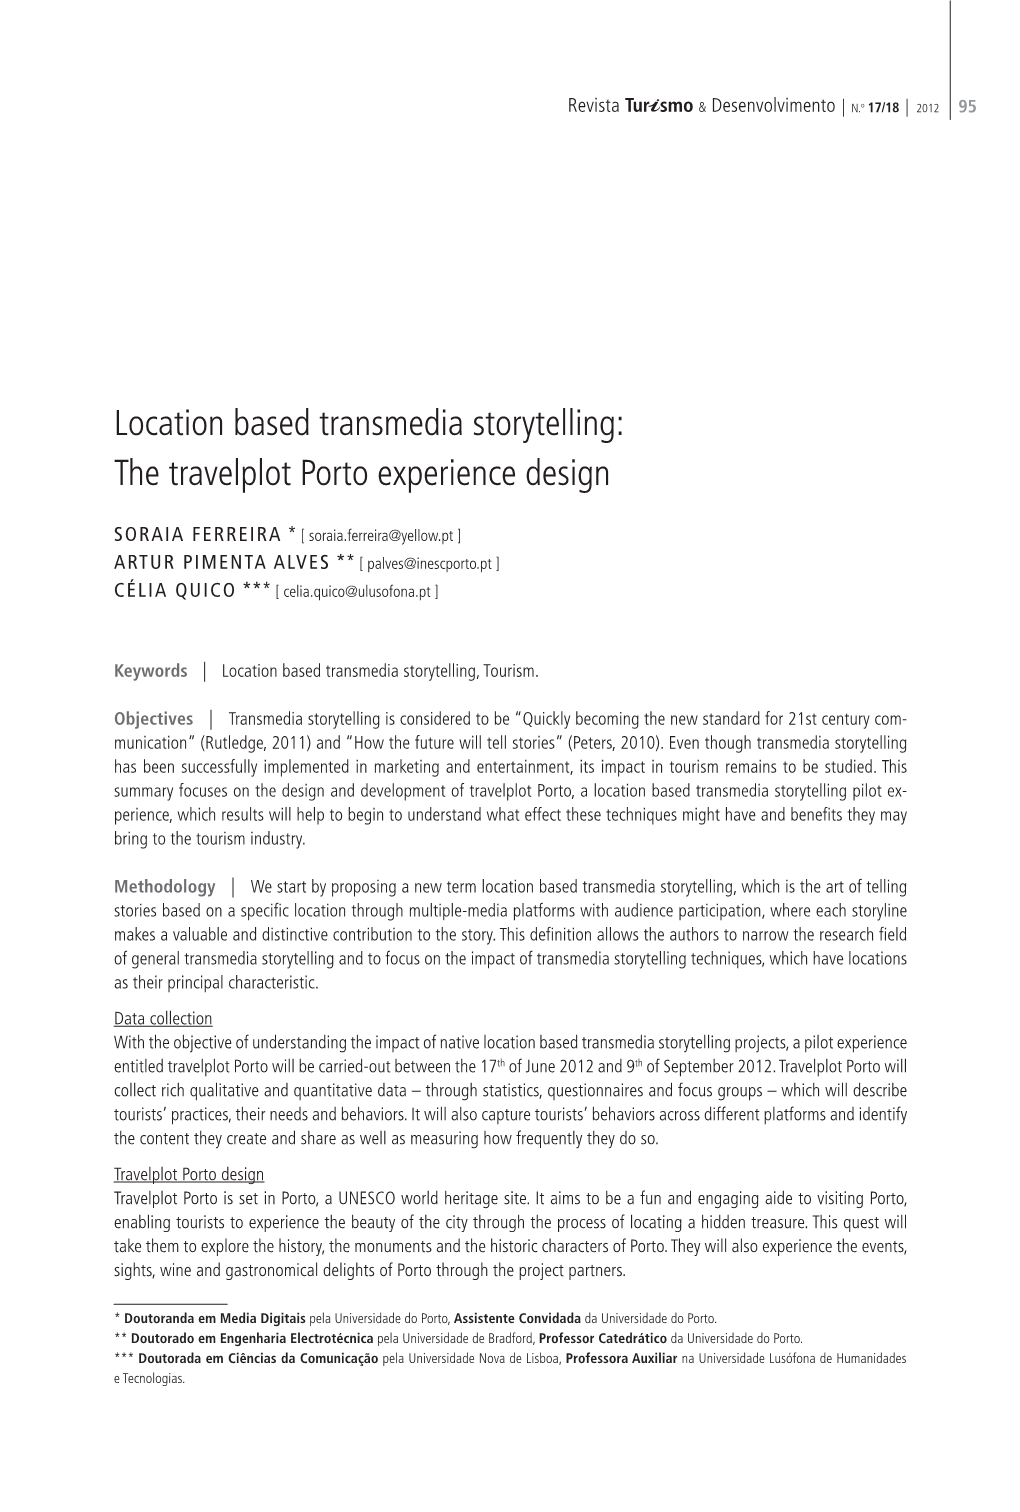 Location Based Transmedia Storytelling: the Travelplot Porto Experience Design